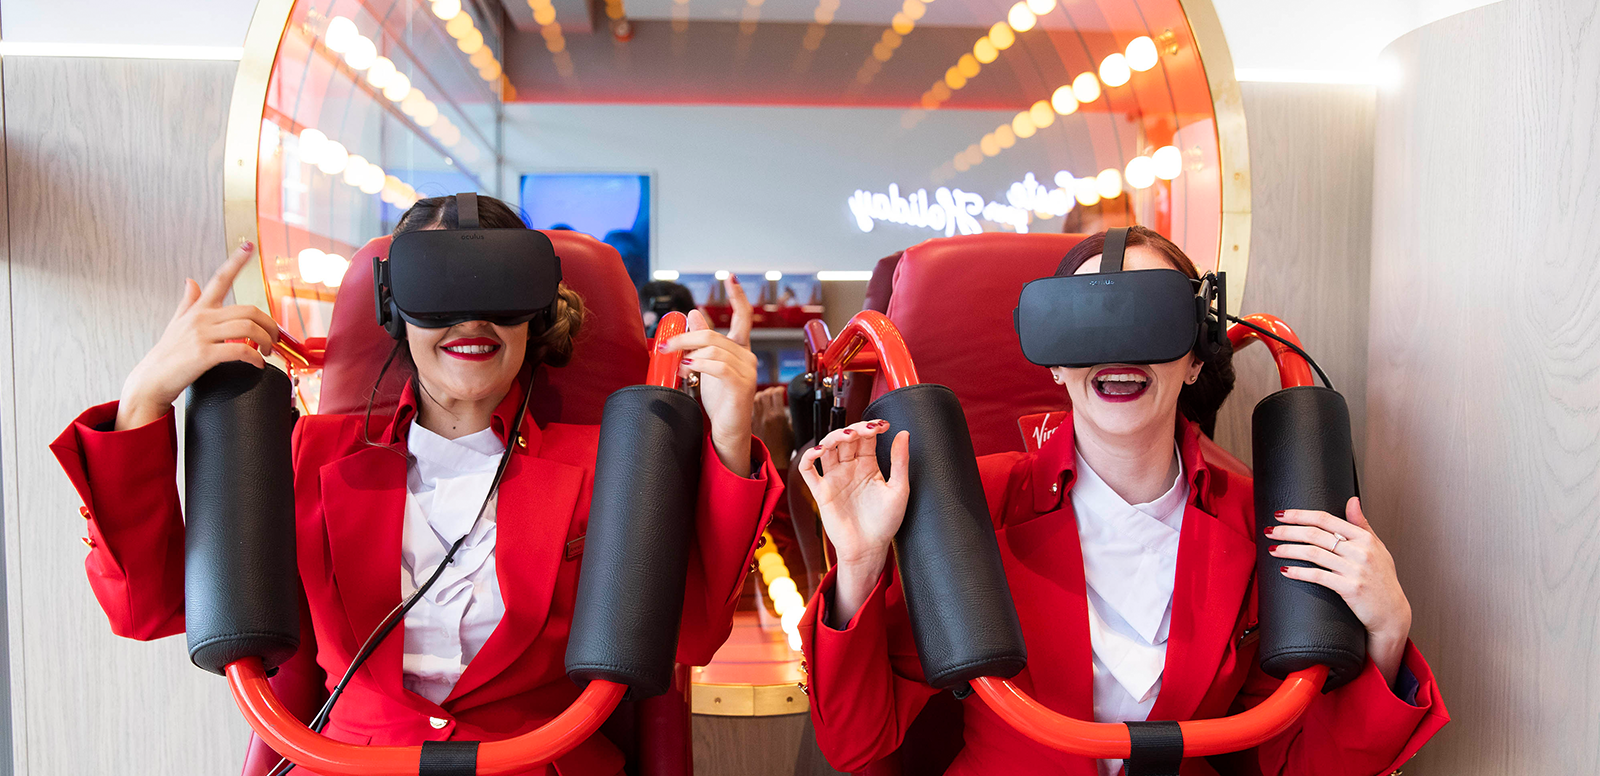 Udfør spiralformet rekruttere Virgin Holidays creates spa, VR rollercoaster and bar in new experience  store - IPM Bitesize